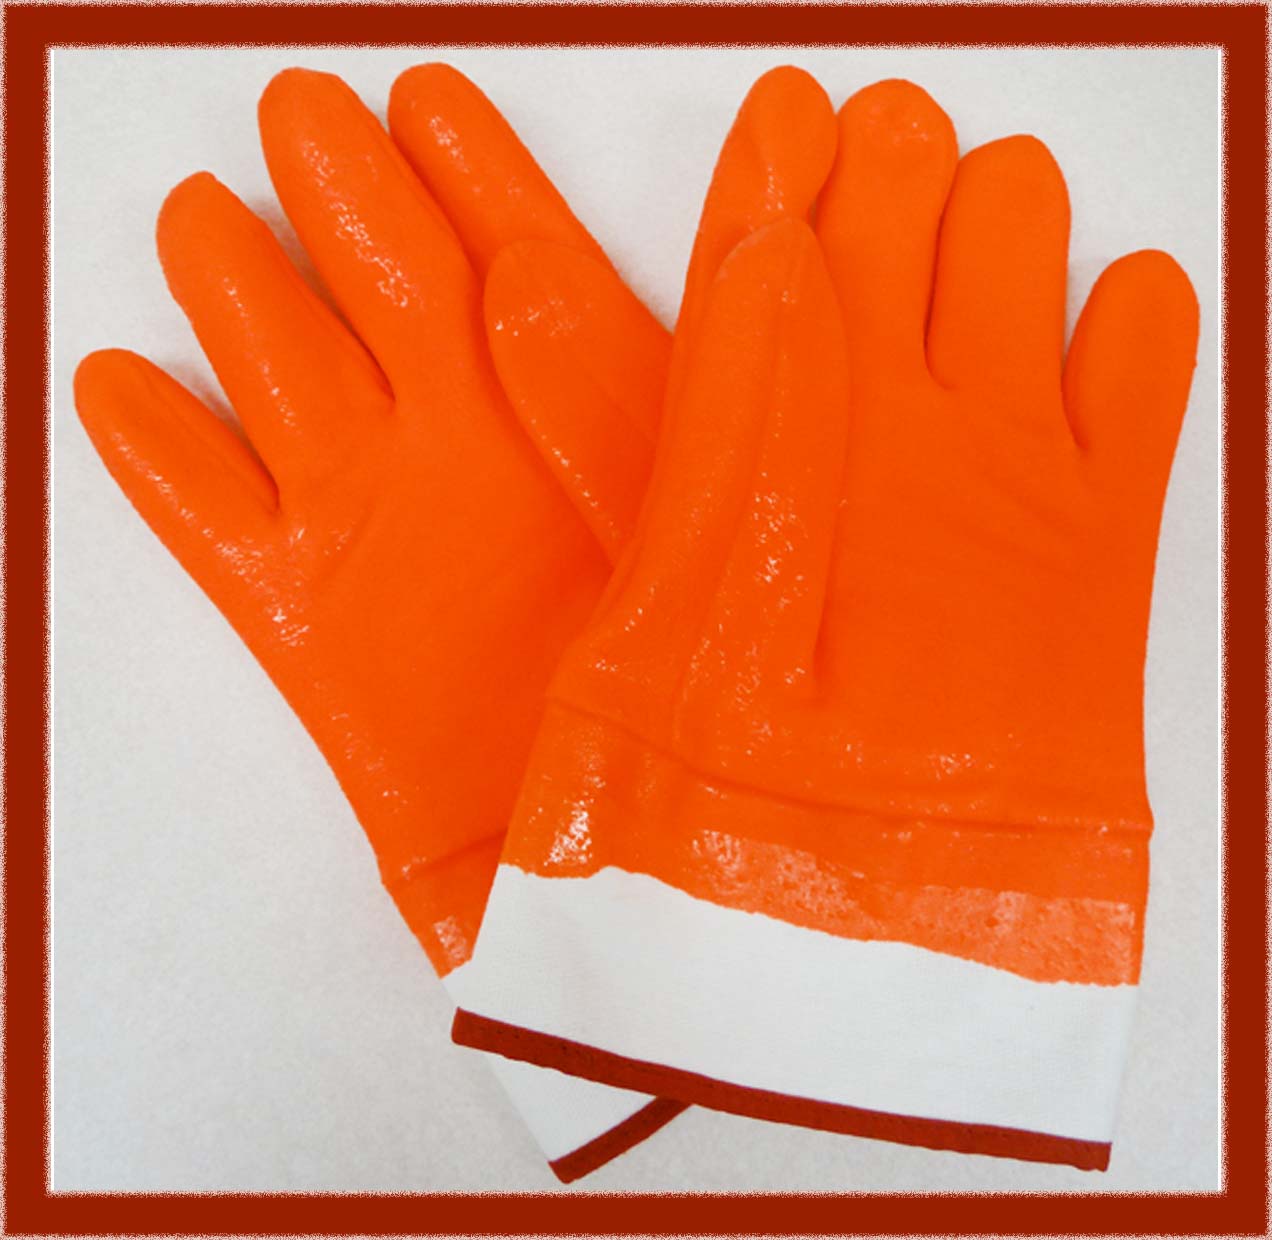 https://jospices.com/wp-content/uploads/2013/10/Orange-gloves1.jpg